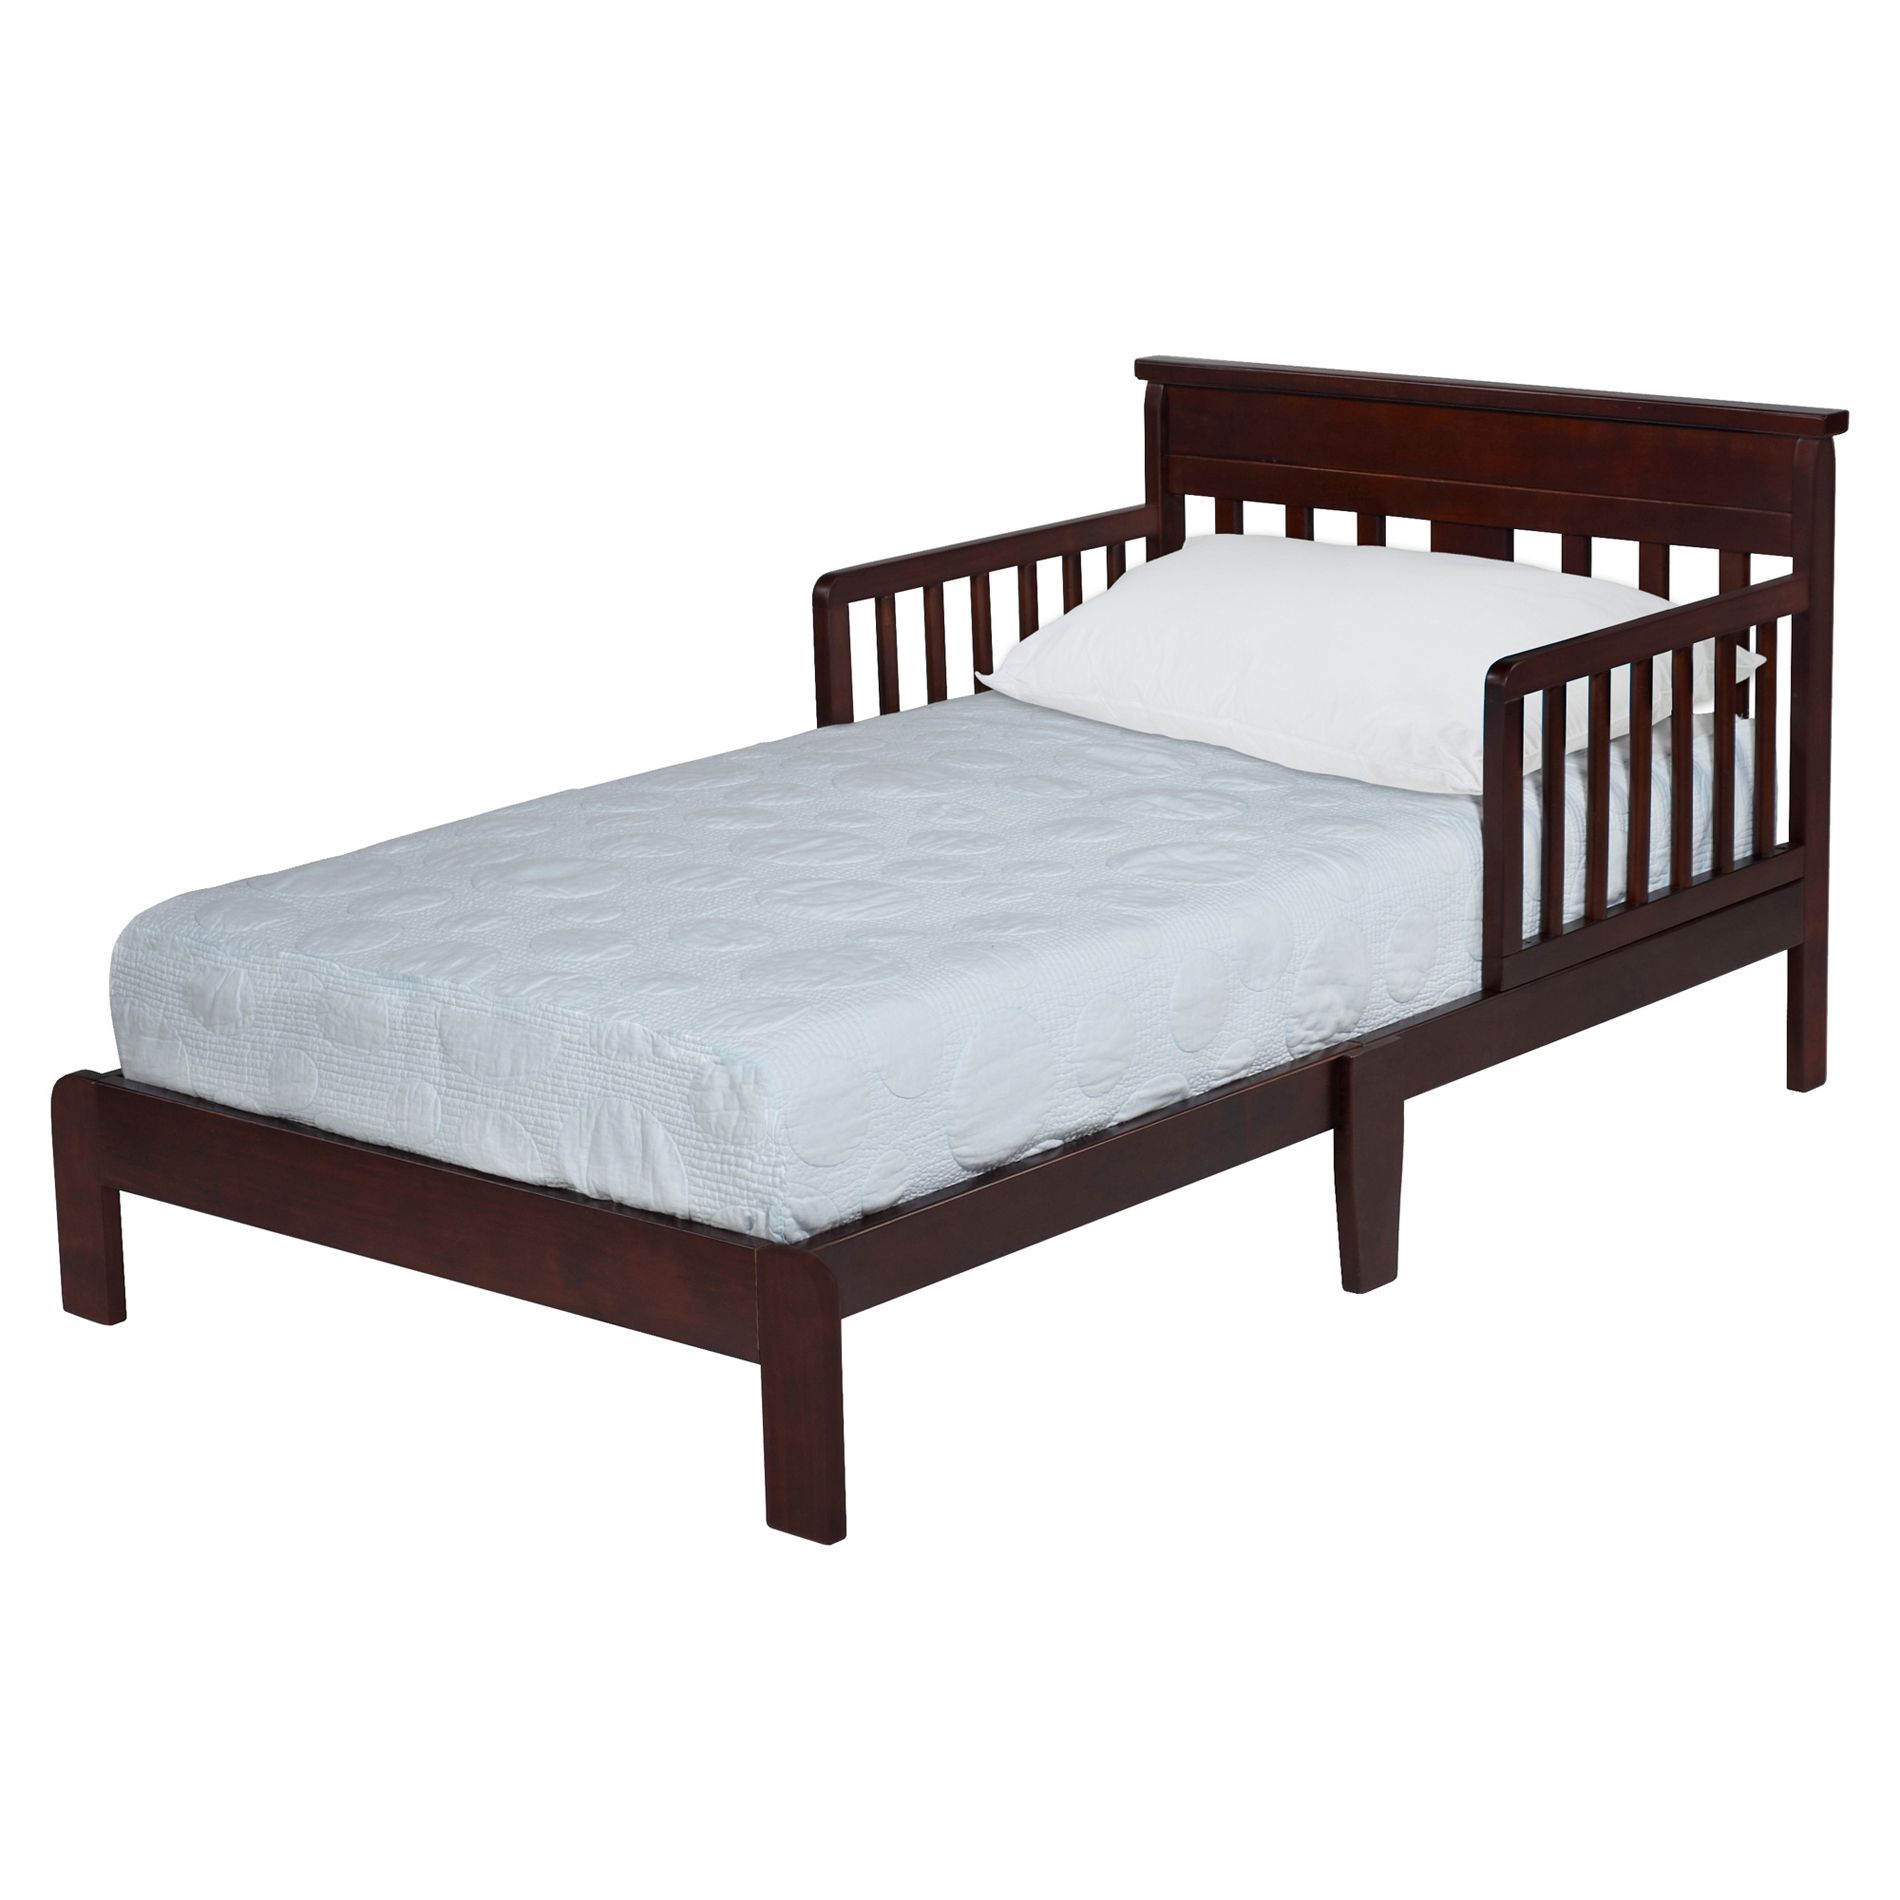 Photos of Delta Wooden Toddler Bed Espresso - Baby - Toddler Furniture - Toddler Beds wooden toddler bed